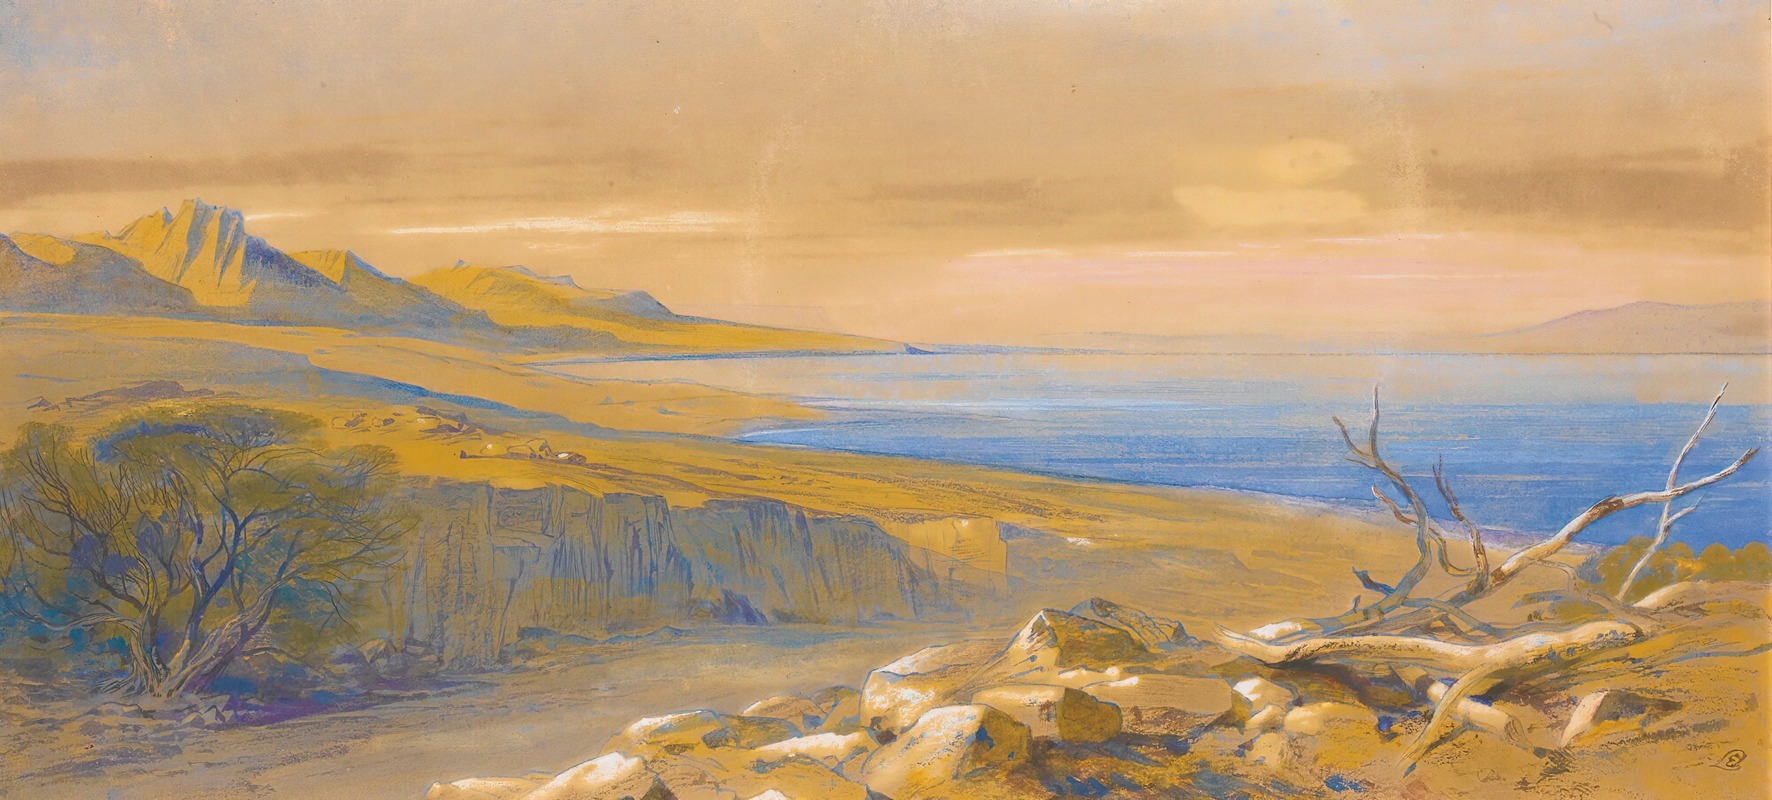 Edward Lear - The Dead Sea, Jordan